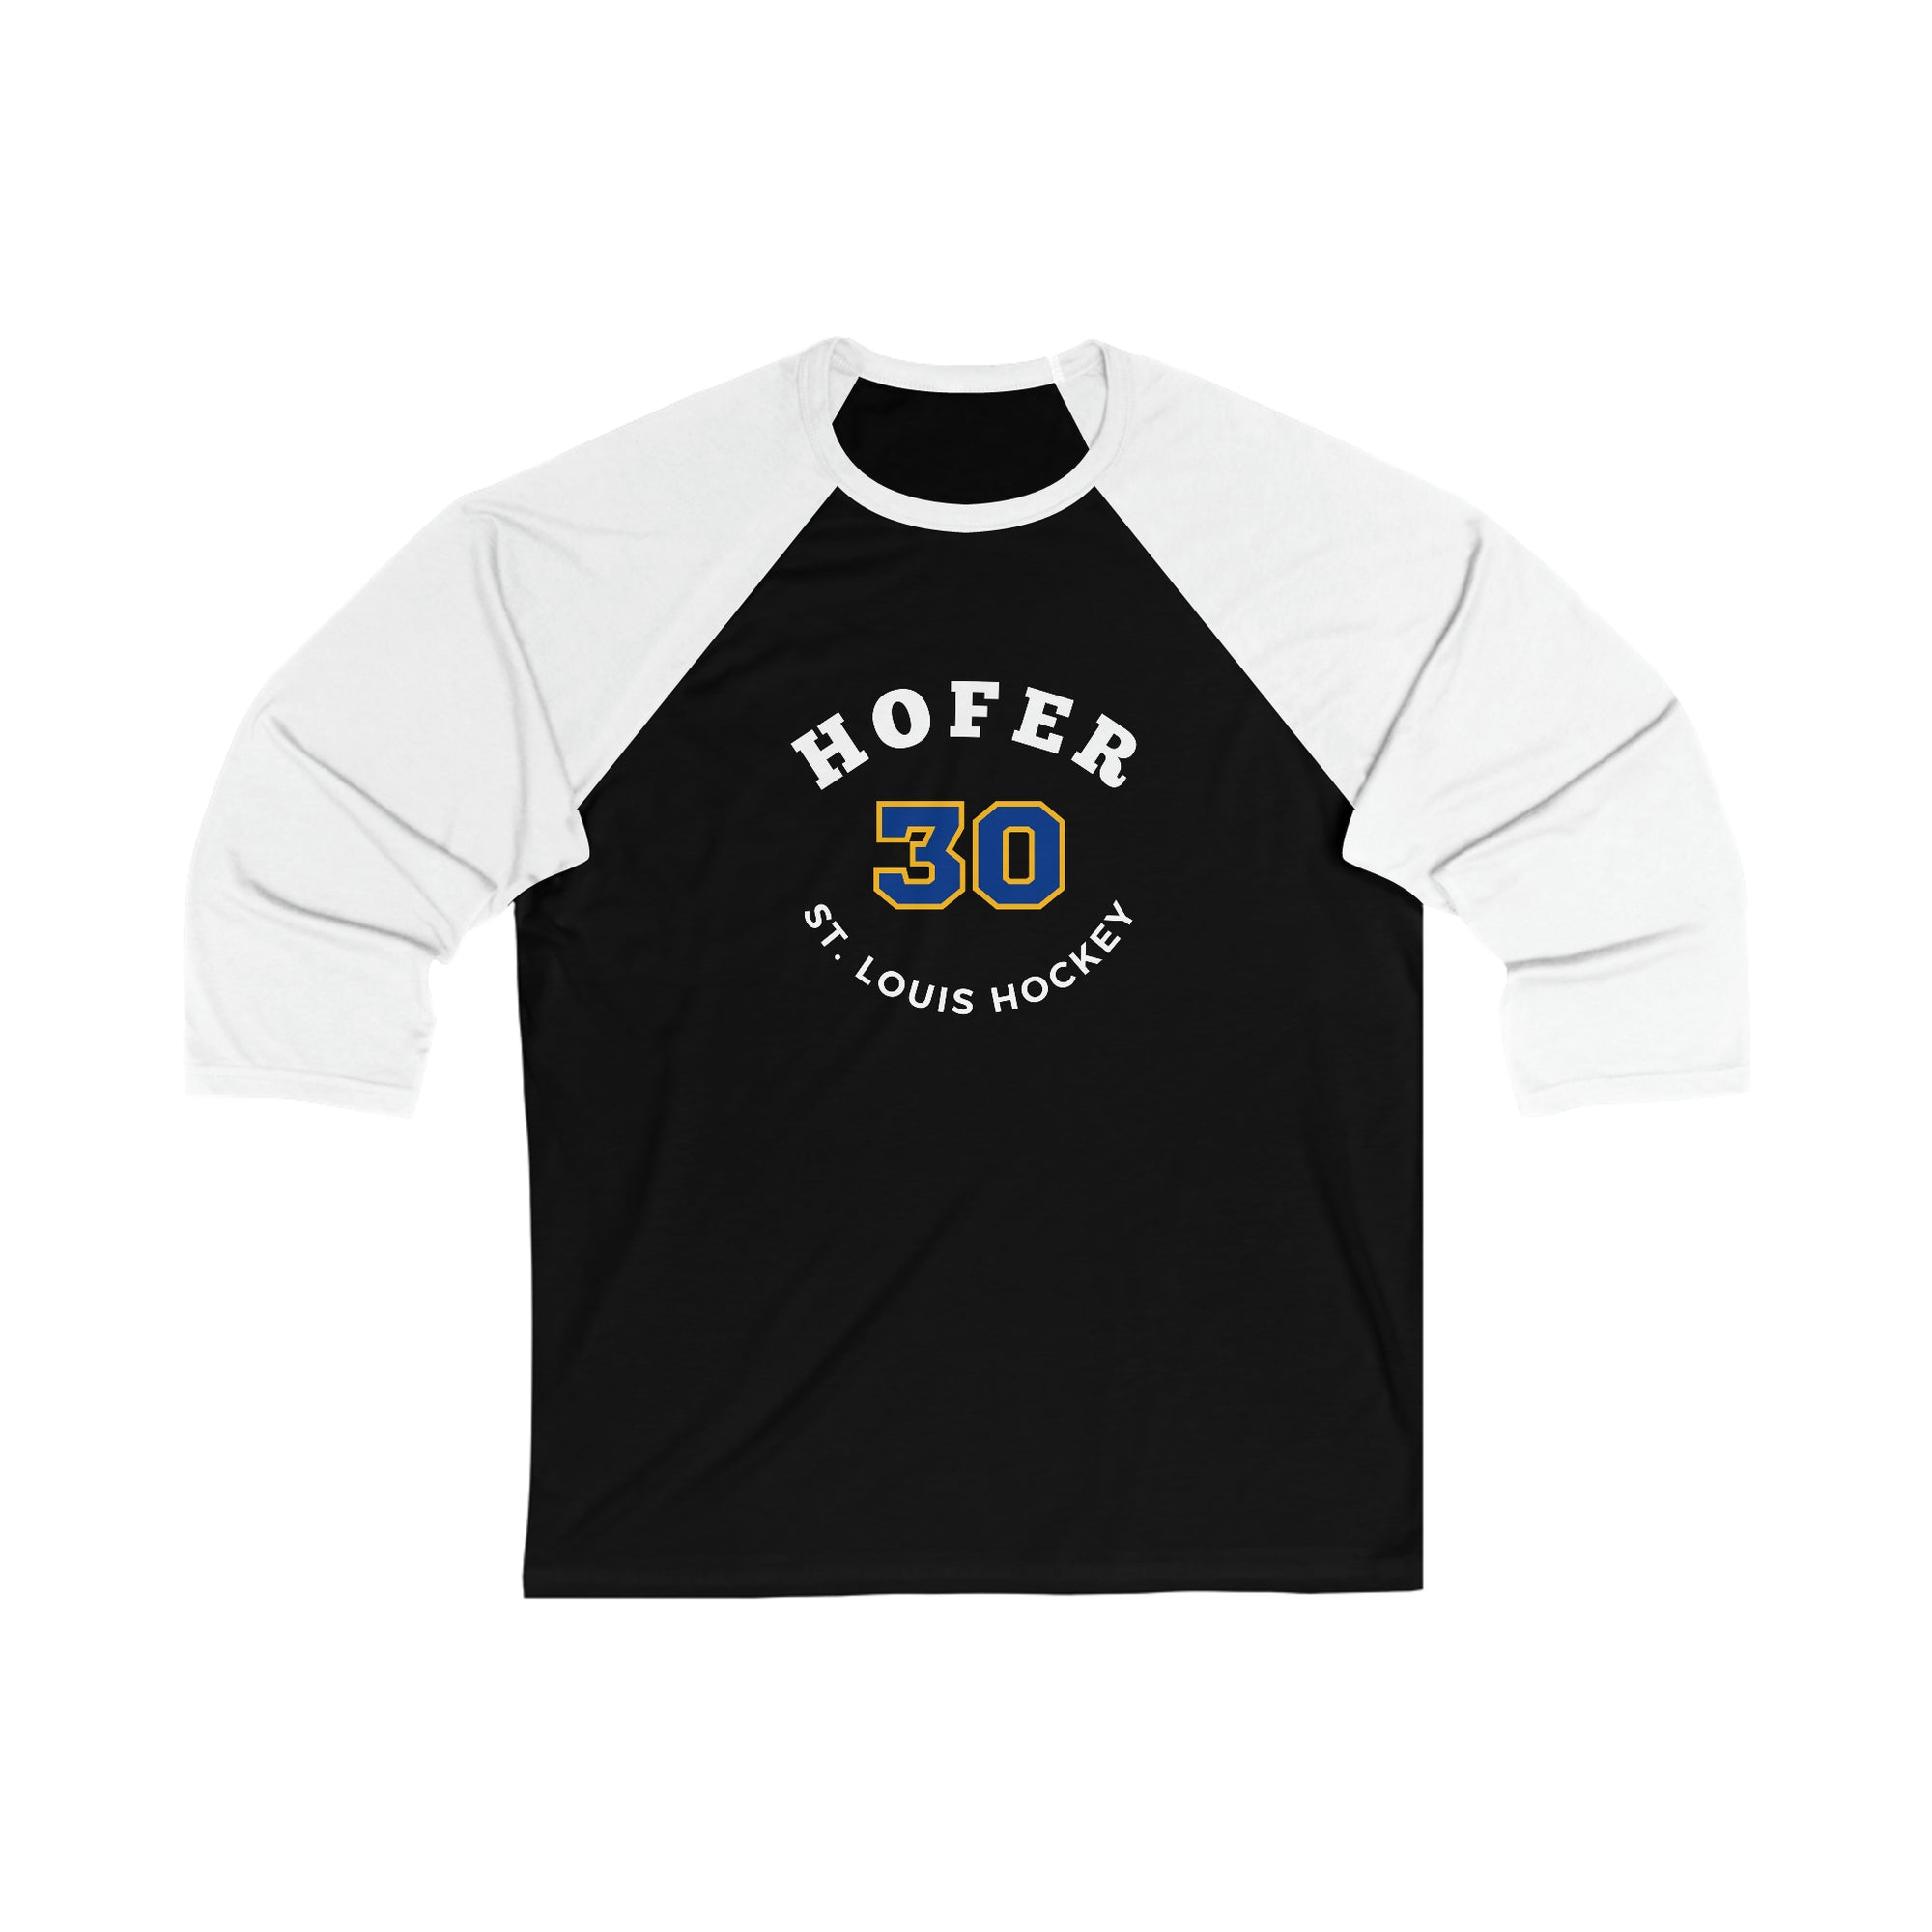 Hofer 30 St. Louis Hockey Number Arch Design Unisex Tri-Blend 3/4 Sleeve Raglan Baseball Shirt